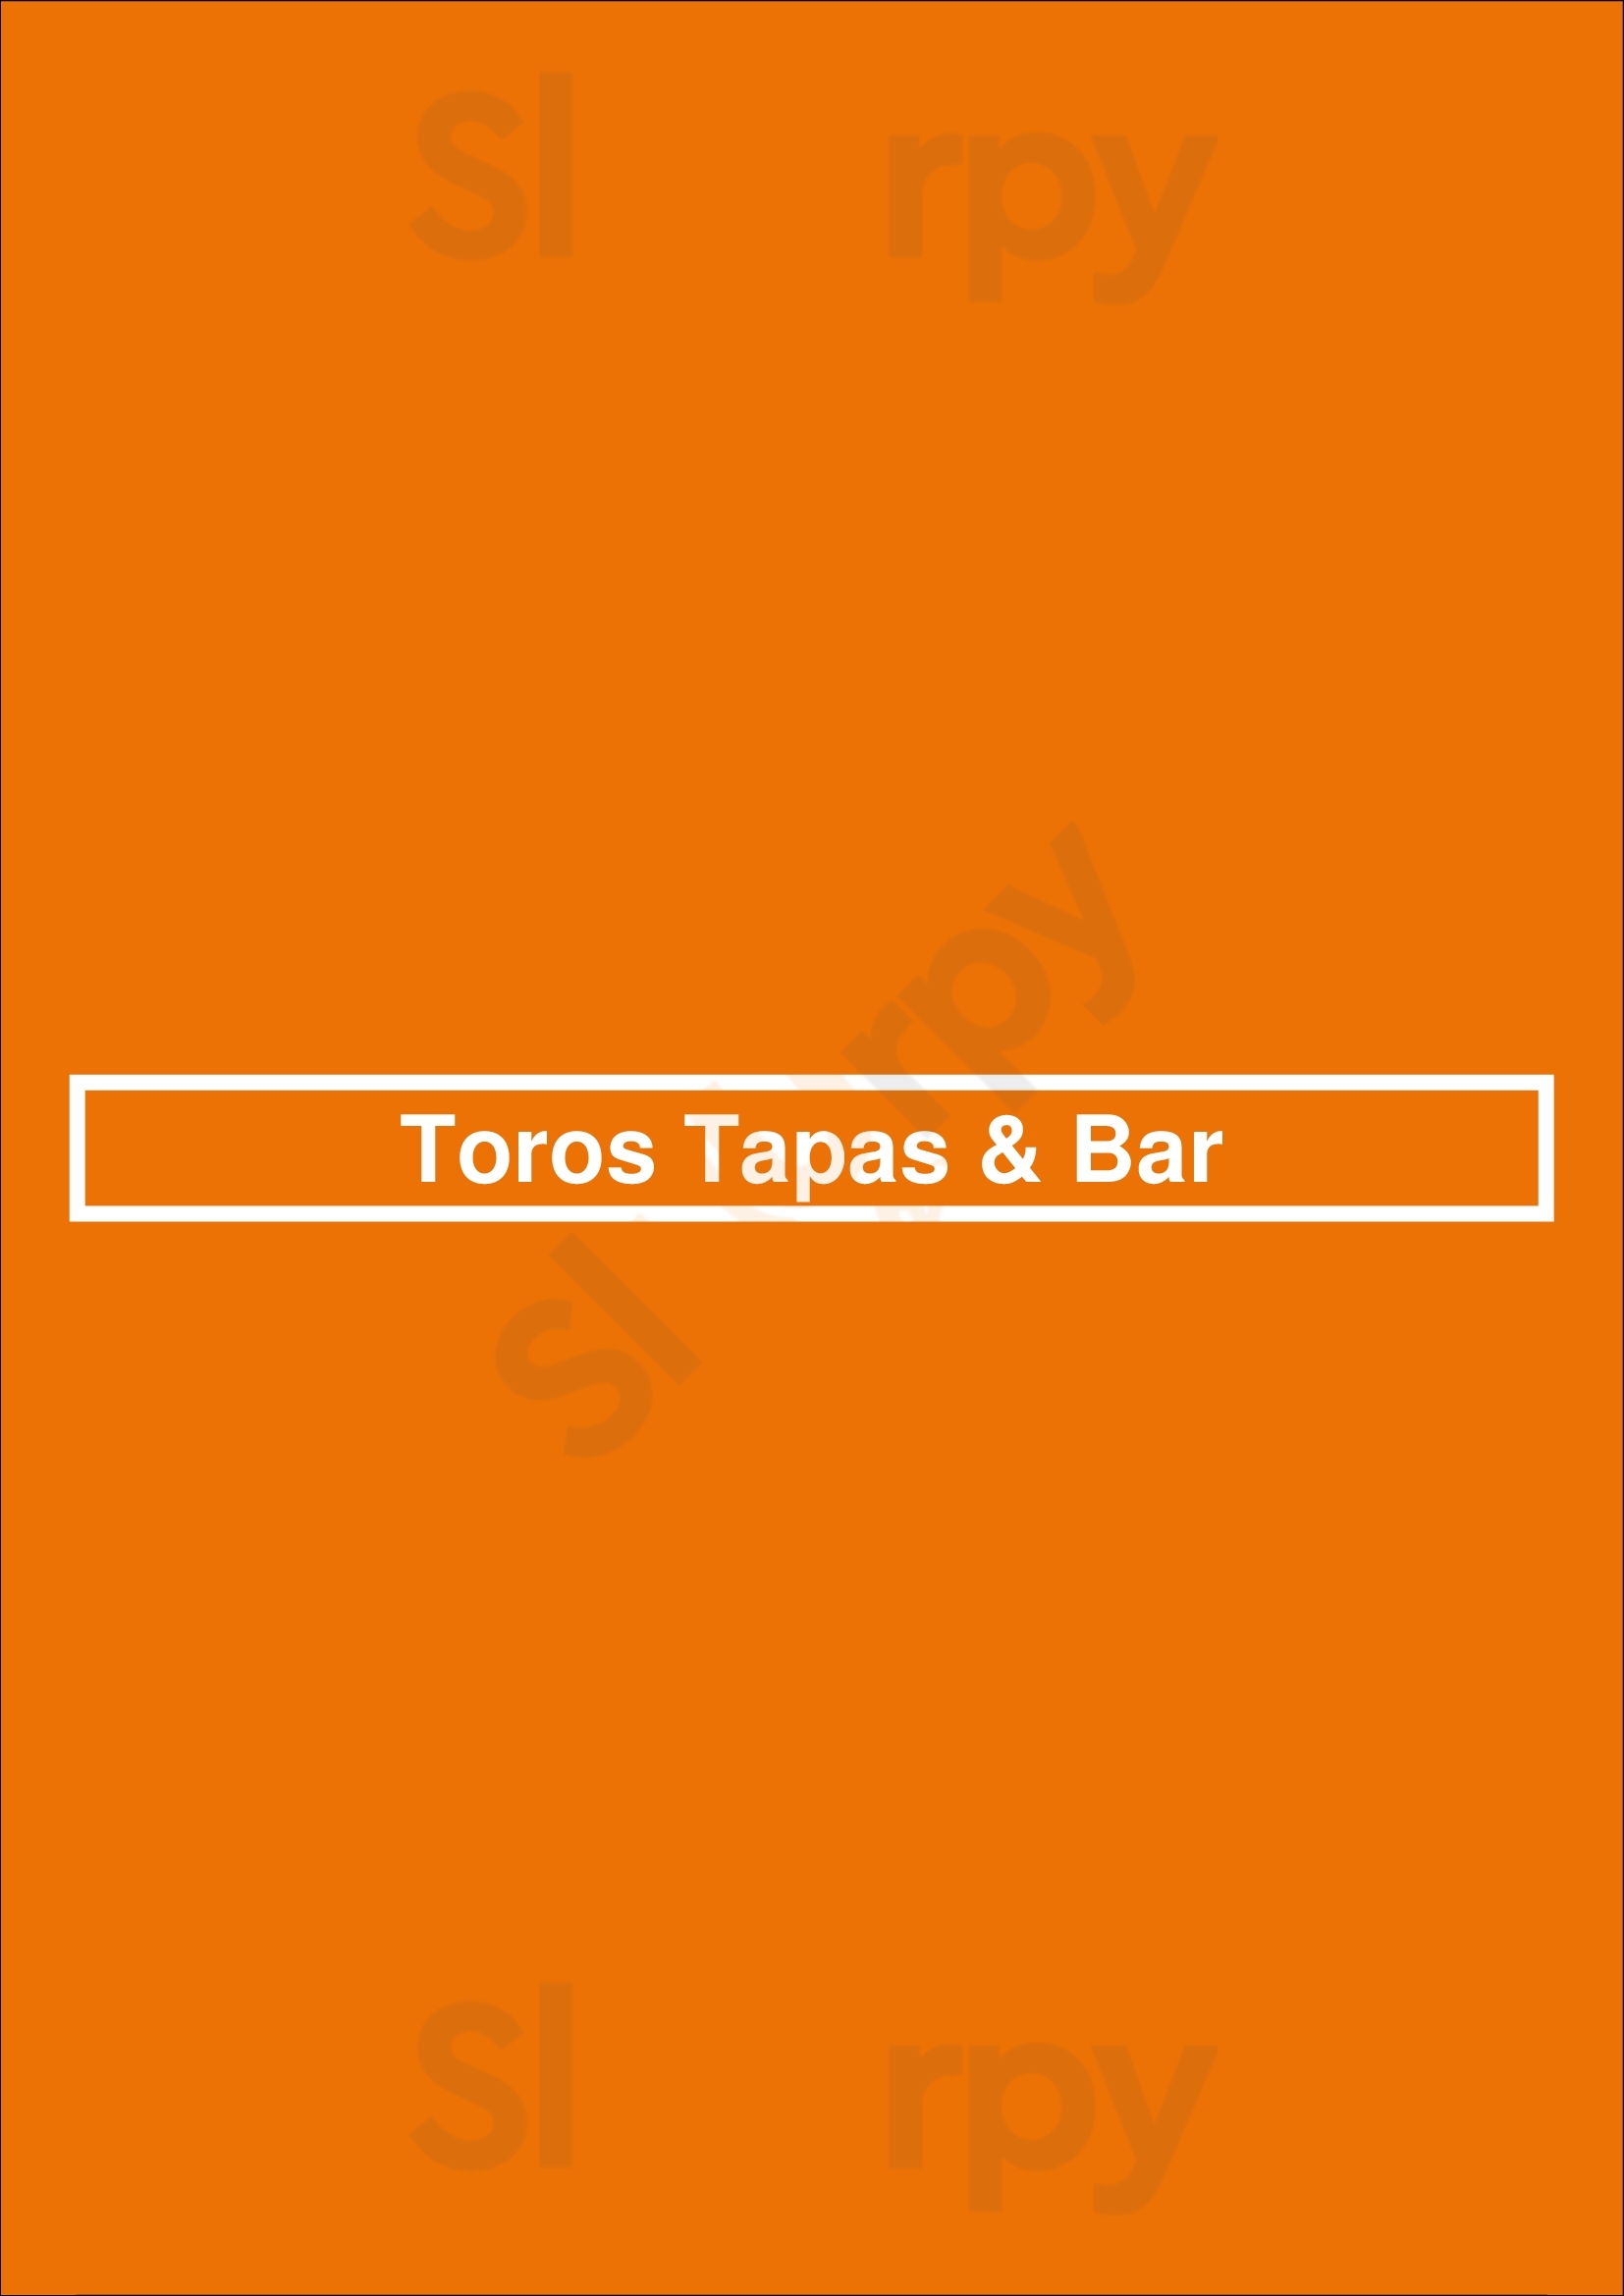 Toros Tapas & Bar Sydney Menu - 1